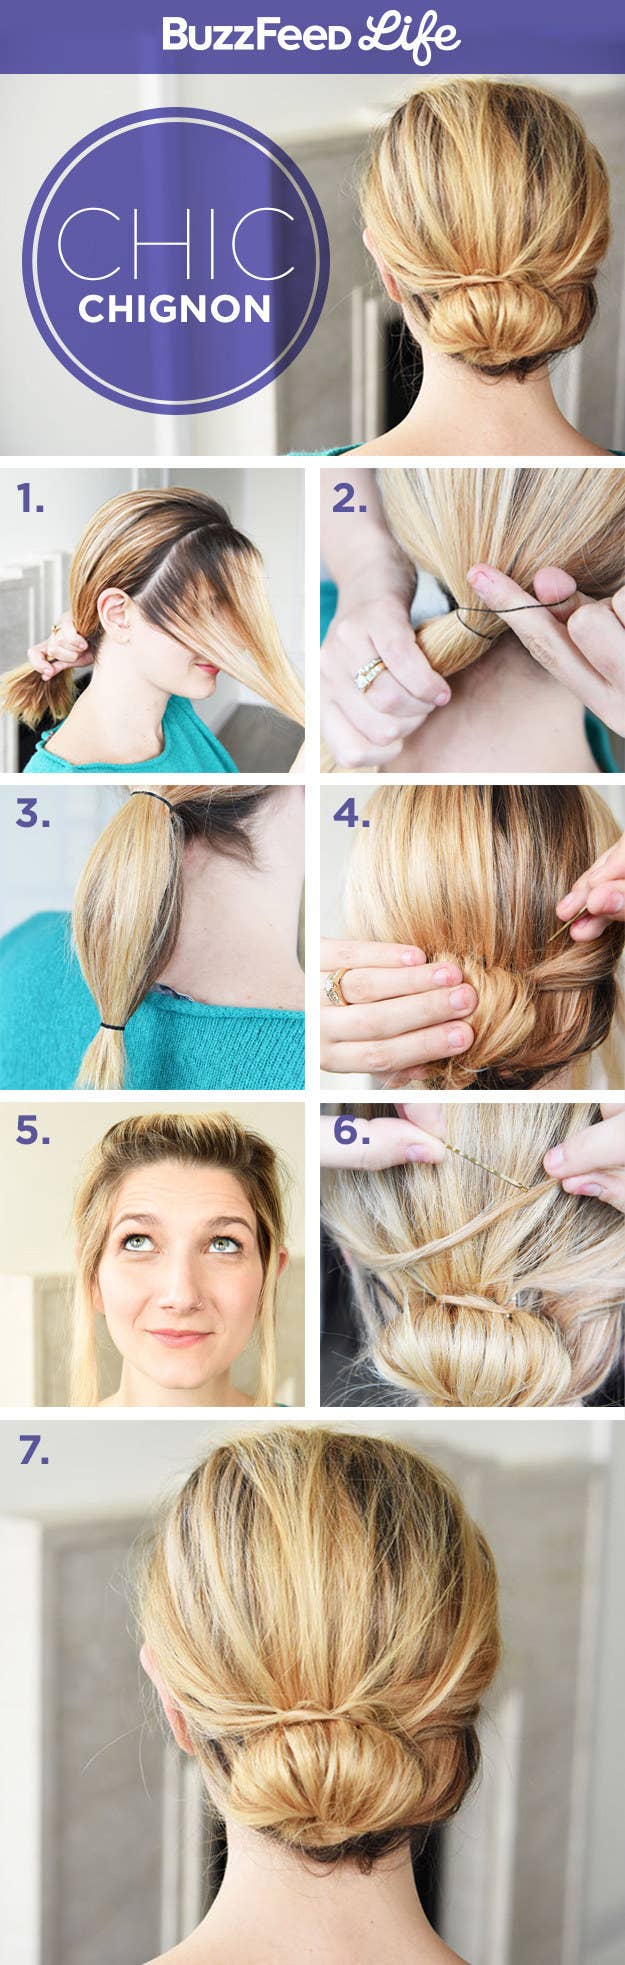 44 Easy Hairstyles For Medium-Length Hair